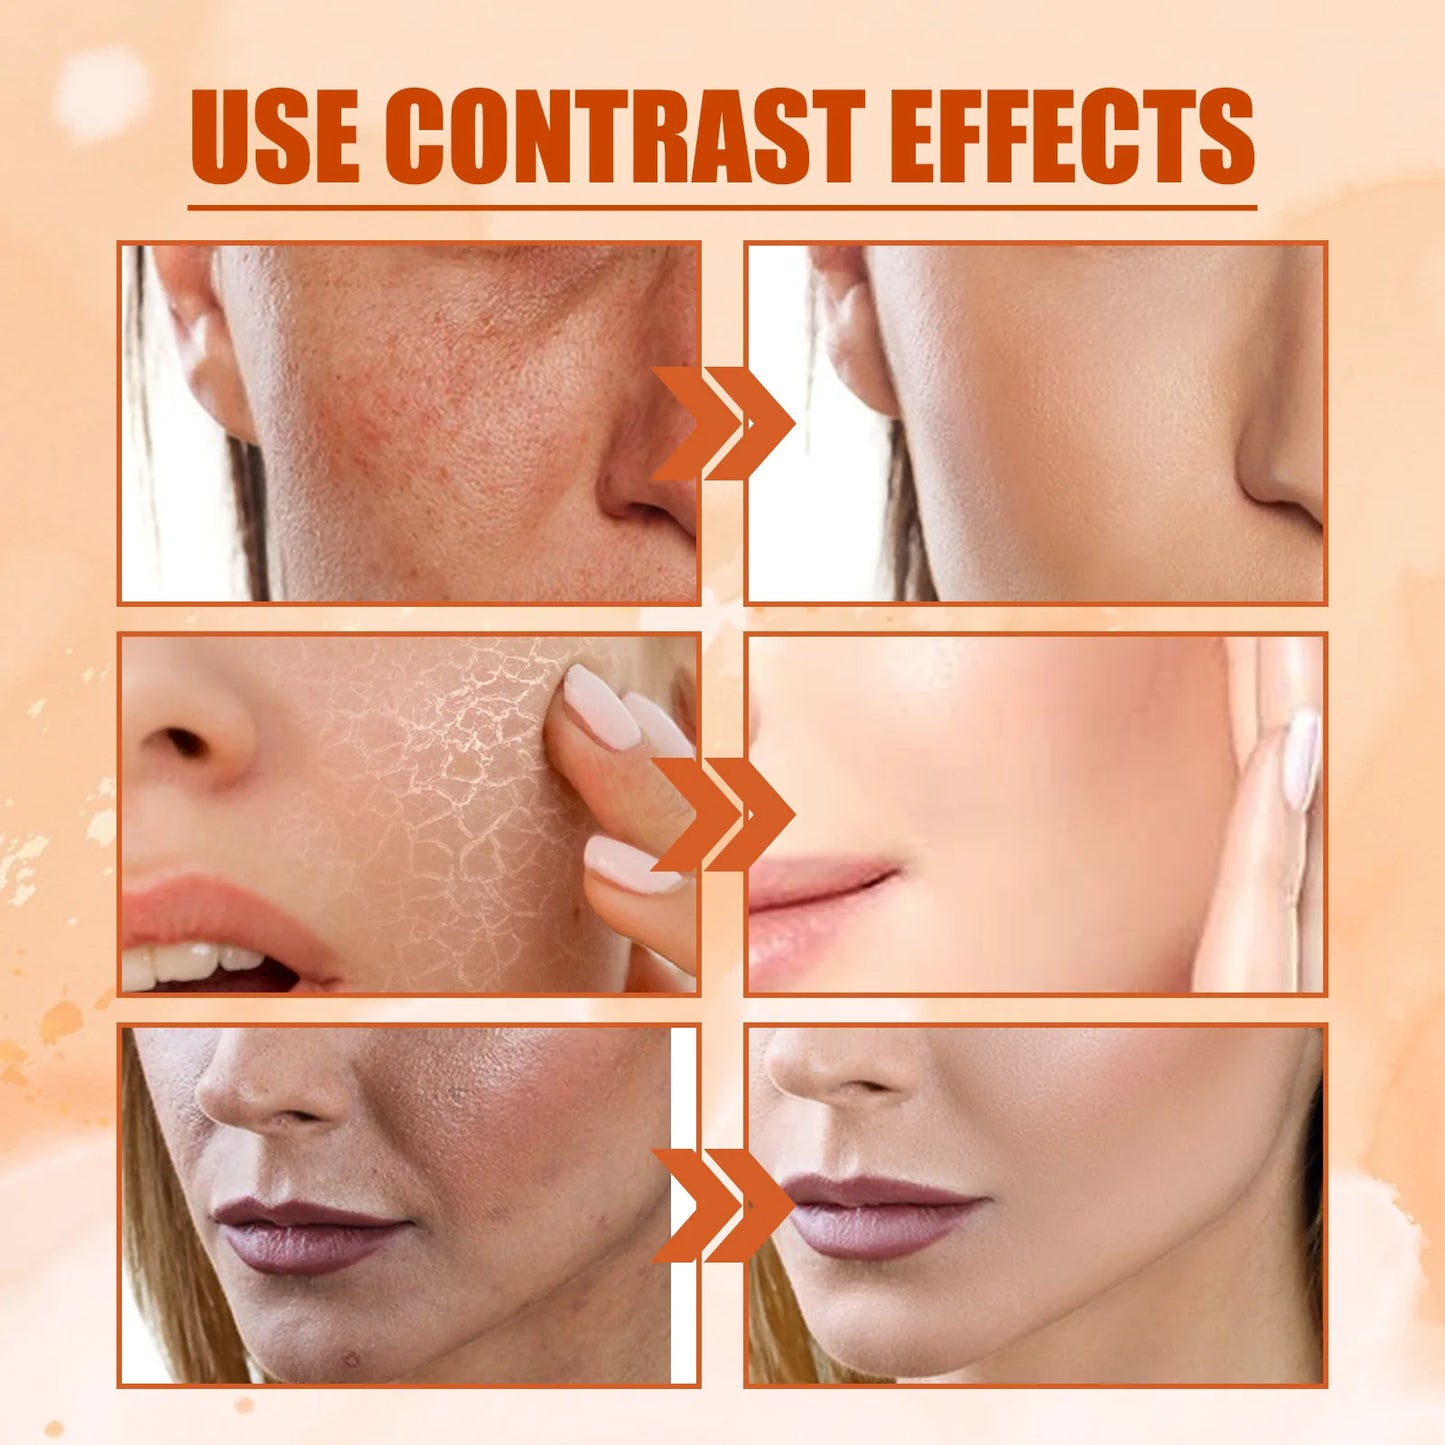 Vitamin C Facial Spray Moisturizing Oil Control Long-lasting Fade Acne Relieve Redness Toner Nourishing Natural Mist Face Spray